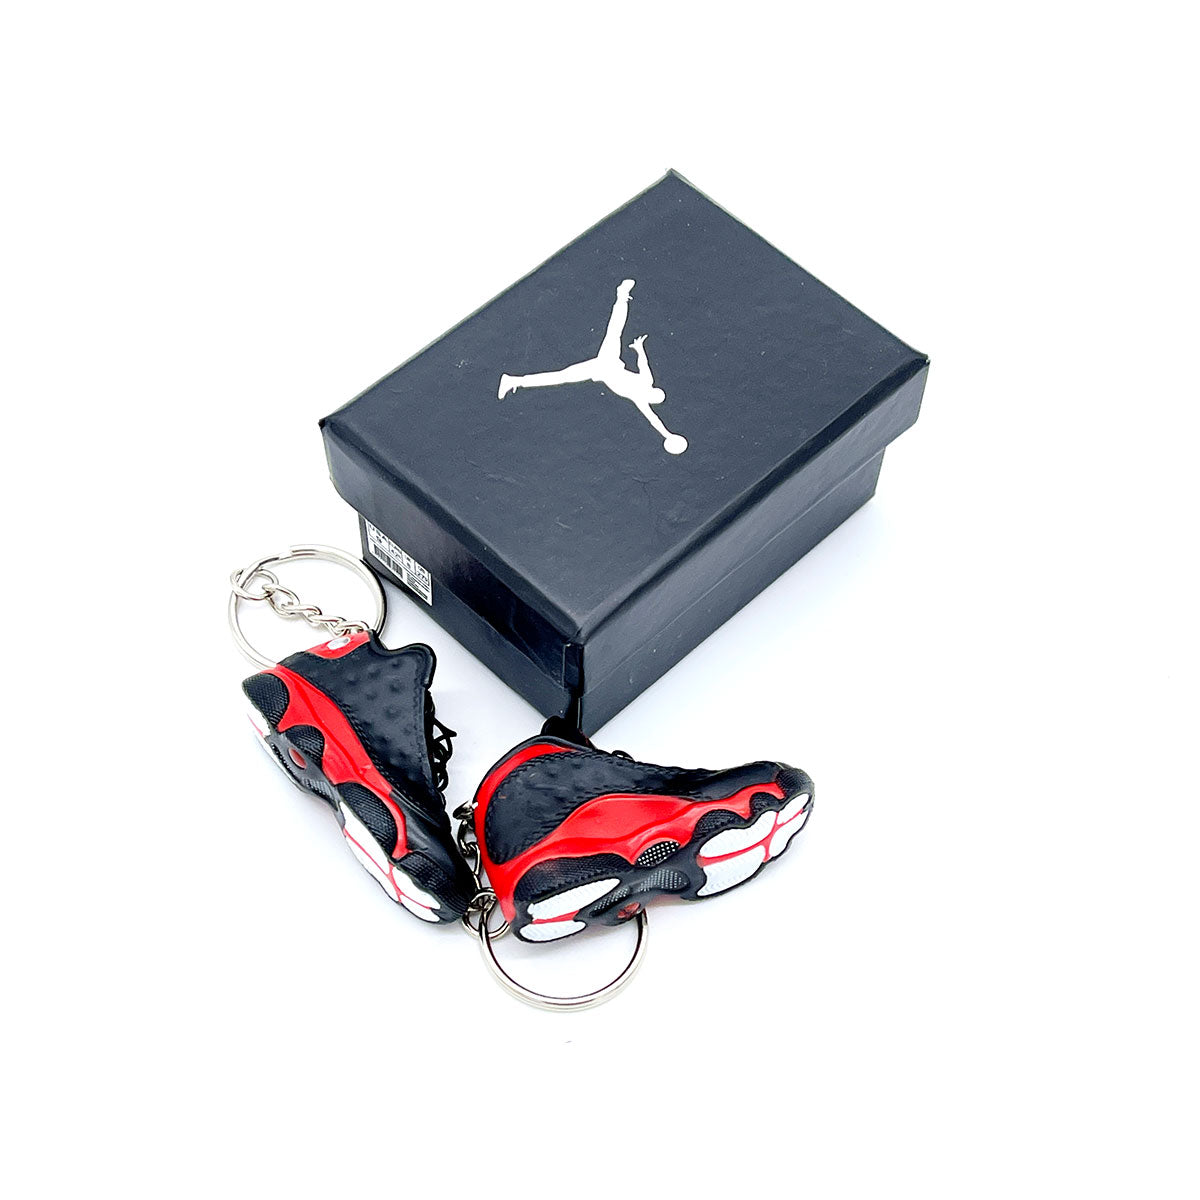 3D Sneaker Keychain- Air Jordan 13 Bred Pair - KickzStore